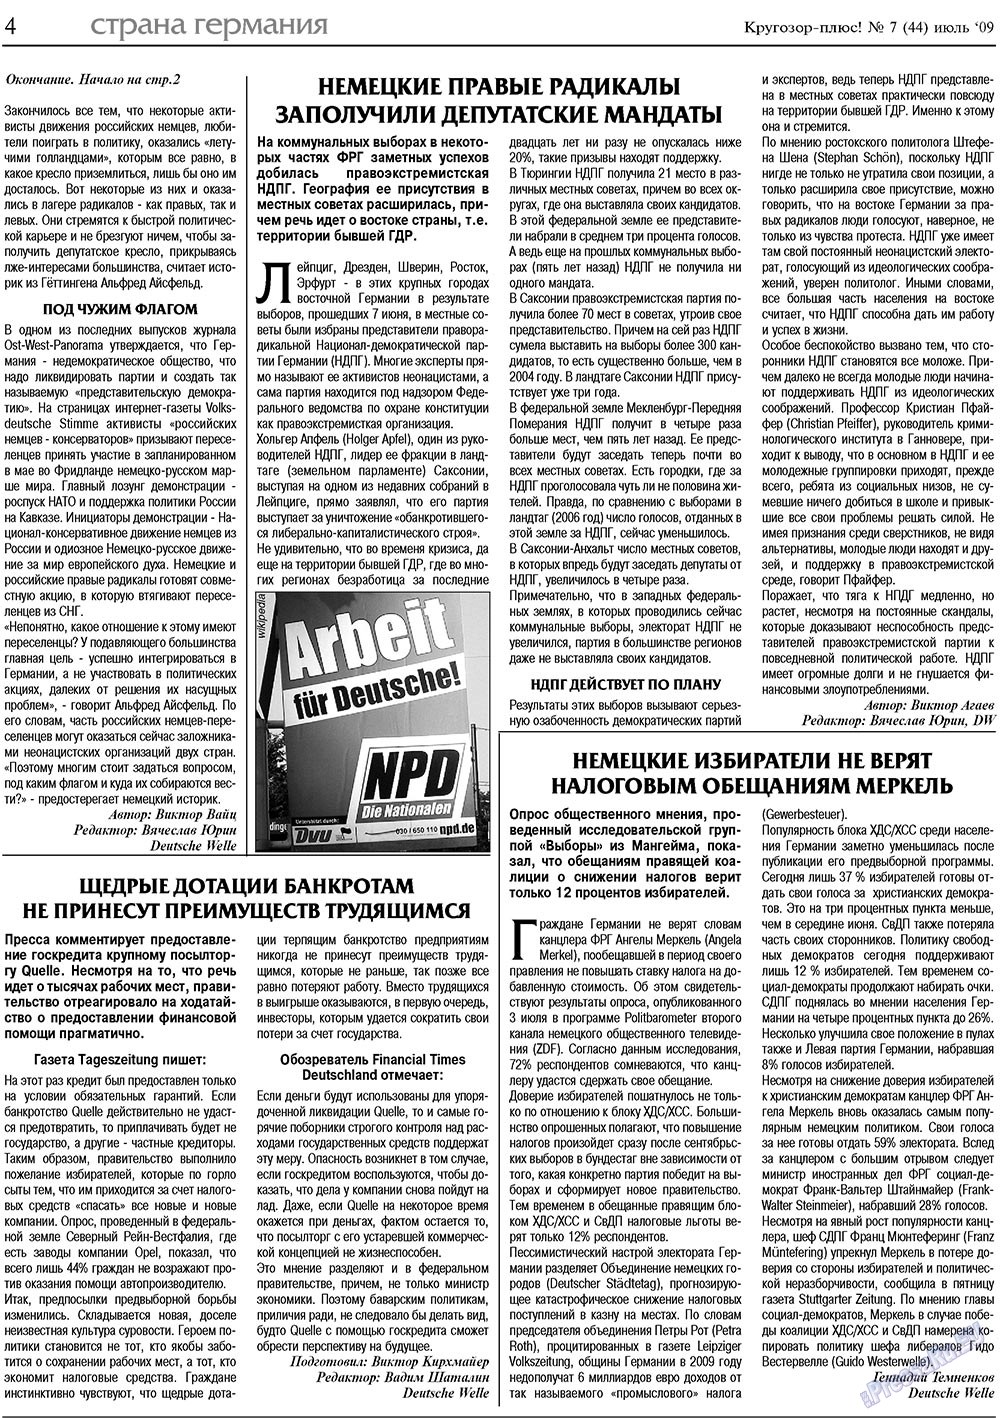 Кругозор плюс! (газета). 2009 год, номер 7, стр. 4